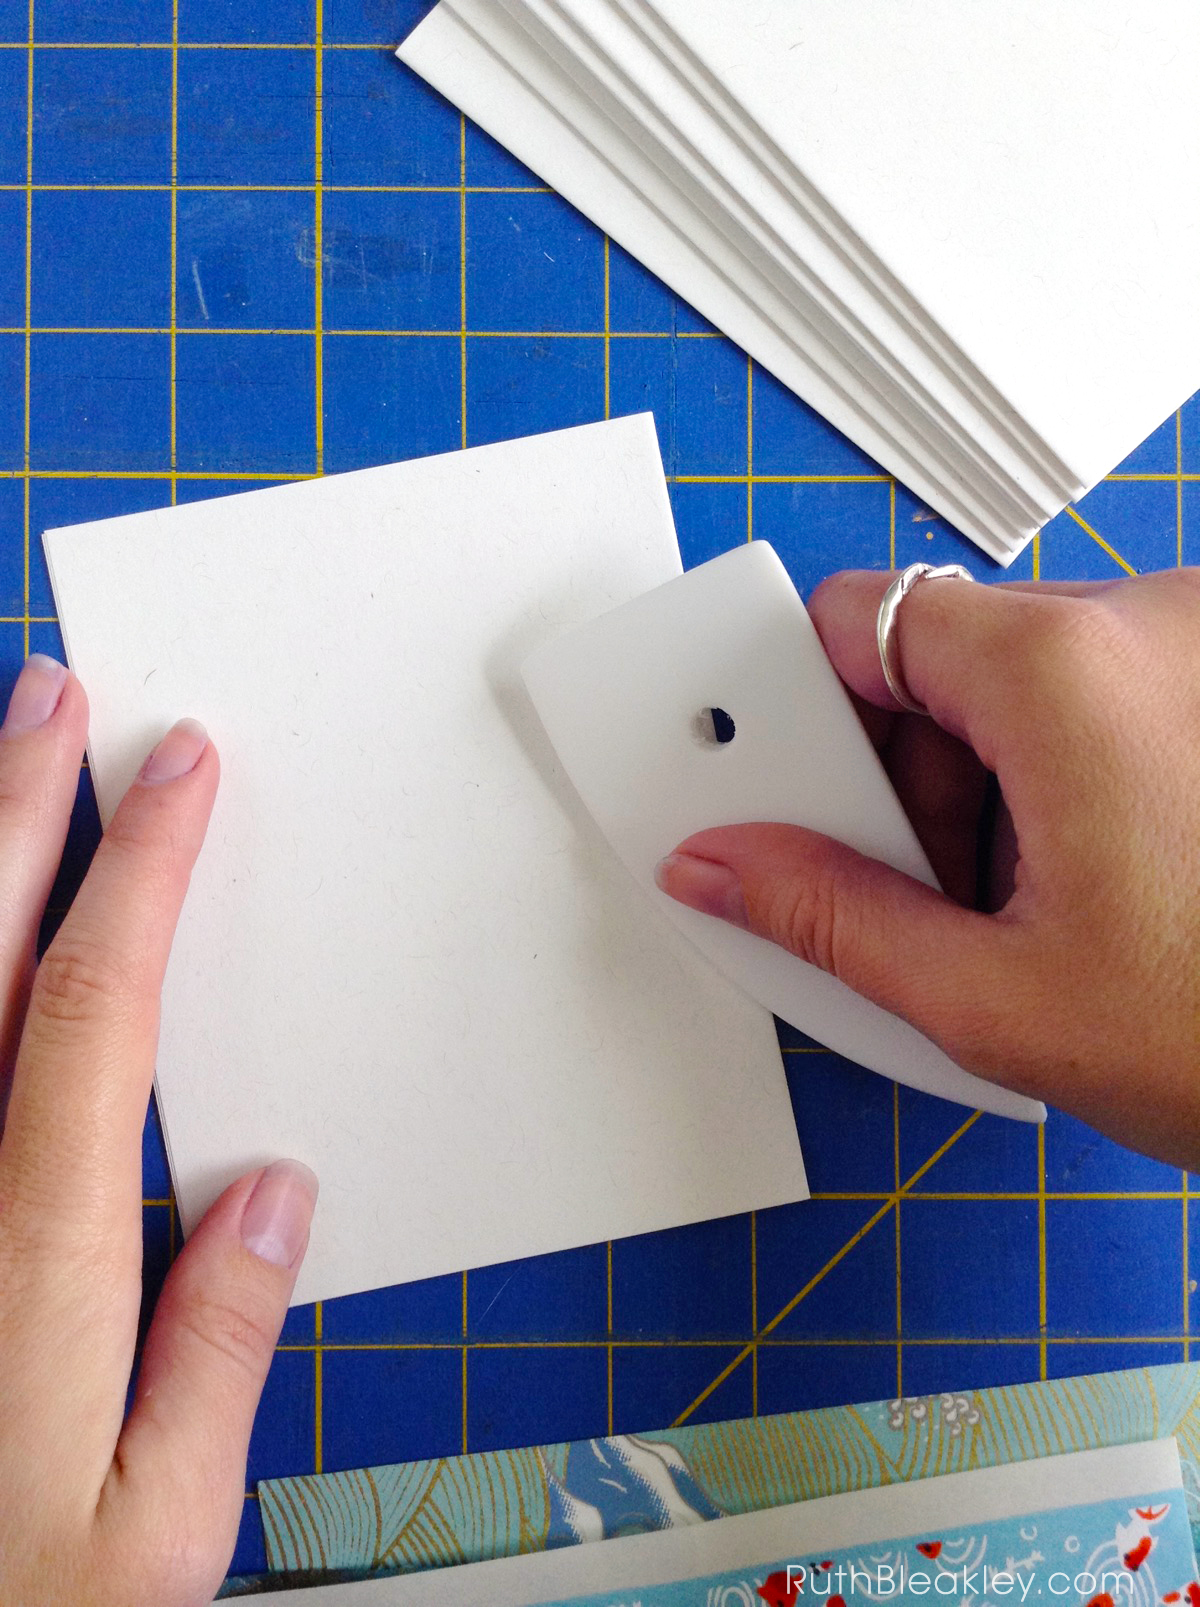 Asfroy Large Teflon Bone Folder - Large Handmade Tool Best for Bookbinding  Origami Paper Crafts Scoring Folding Creasing. Non Scratch Non Glaze Non  Stick. Smooth Ergonomic and Handmade